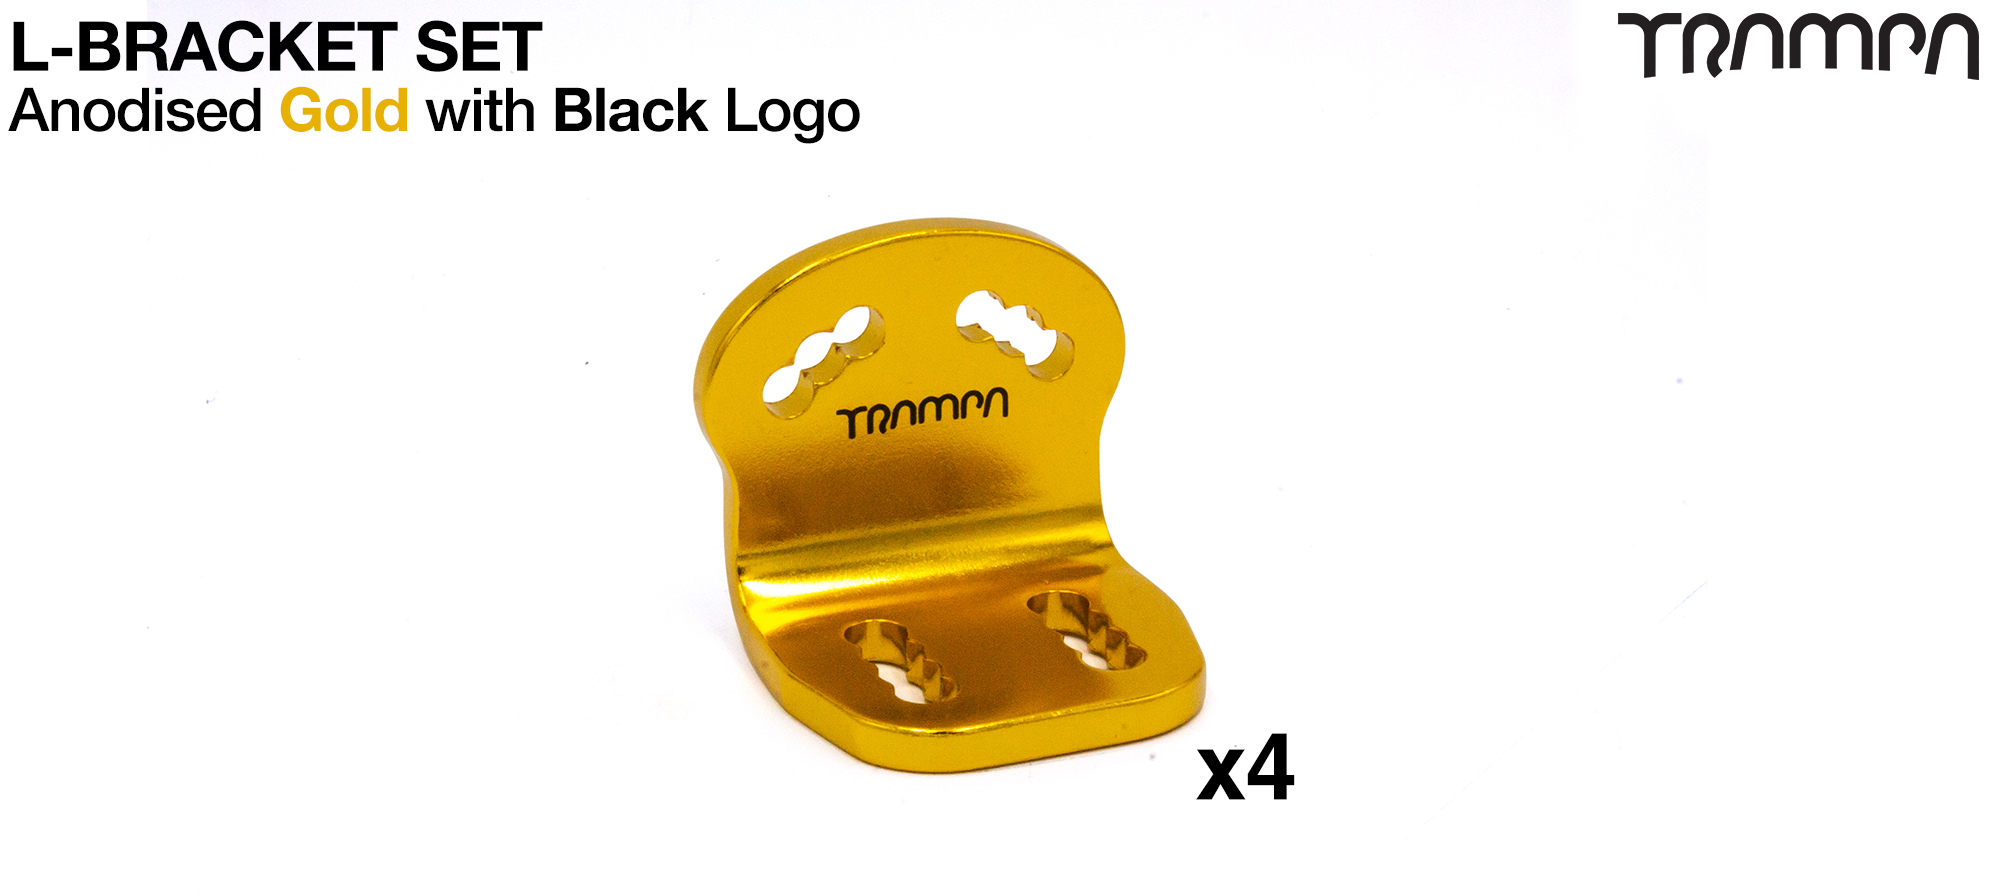 L Bracket - Anodised GOLD with BLACK logo x4